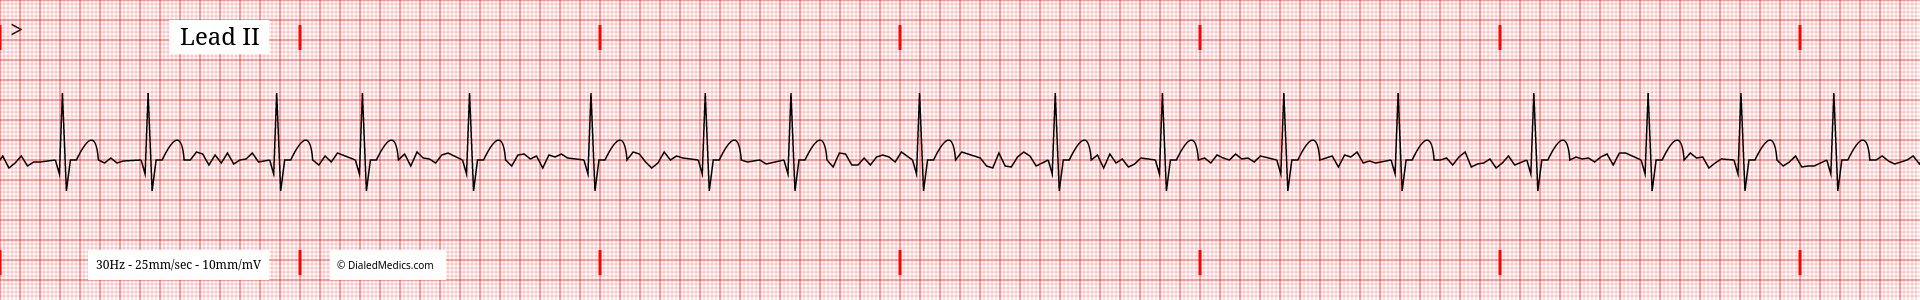 EKG tracing printout of Atrial Fibrillation.